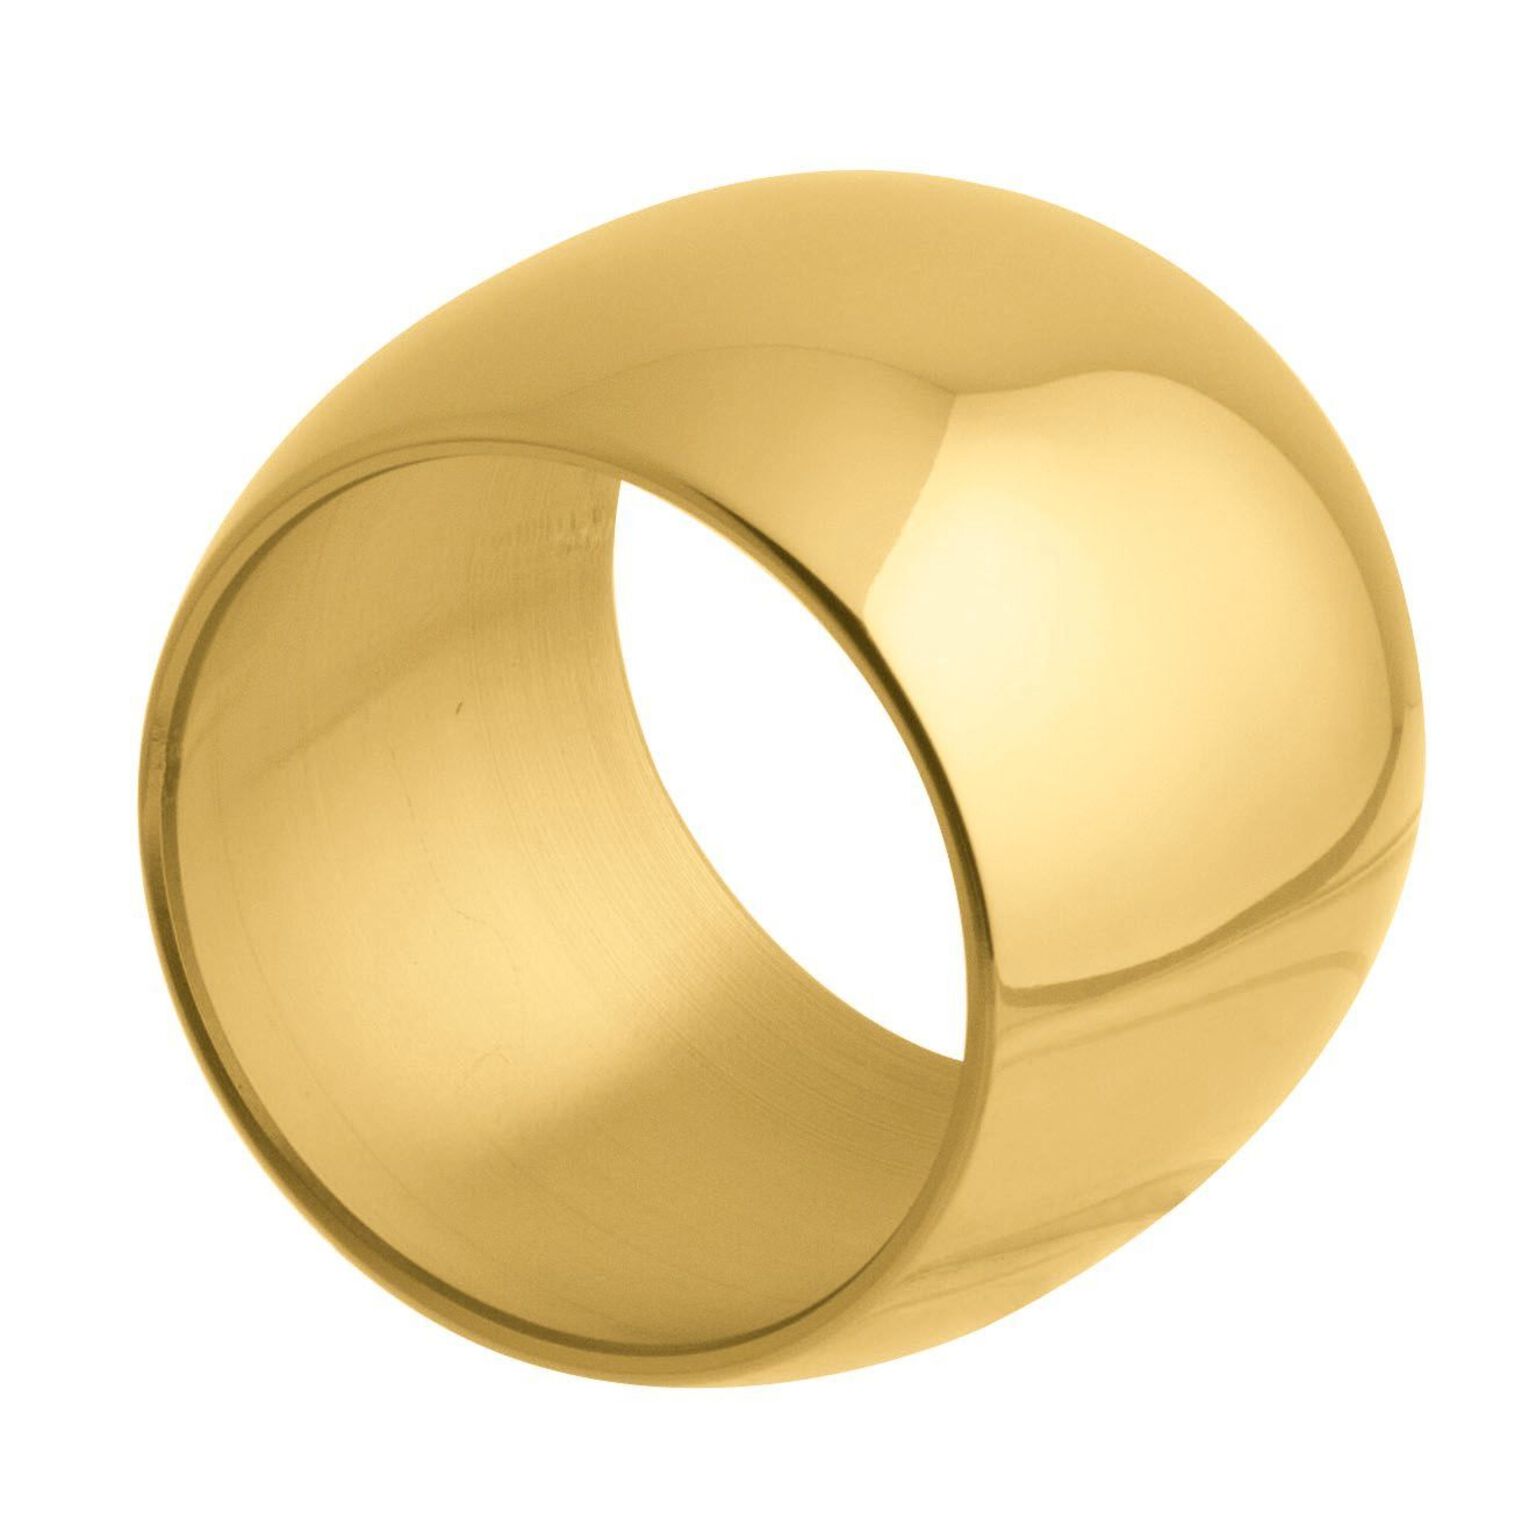 Кольцо для салфеток Диаметр 5 см, Высота 3,5 см., Sambonet Sphera Pvd Gold (Золото)
https://spb.v-b.ru
г.Санкт-Петербург
eshop@v-b.spb.ru
+7(812)3801977